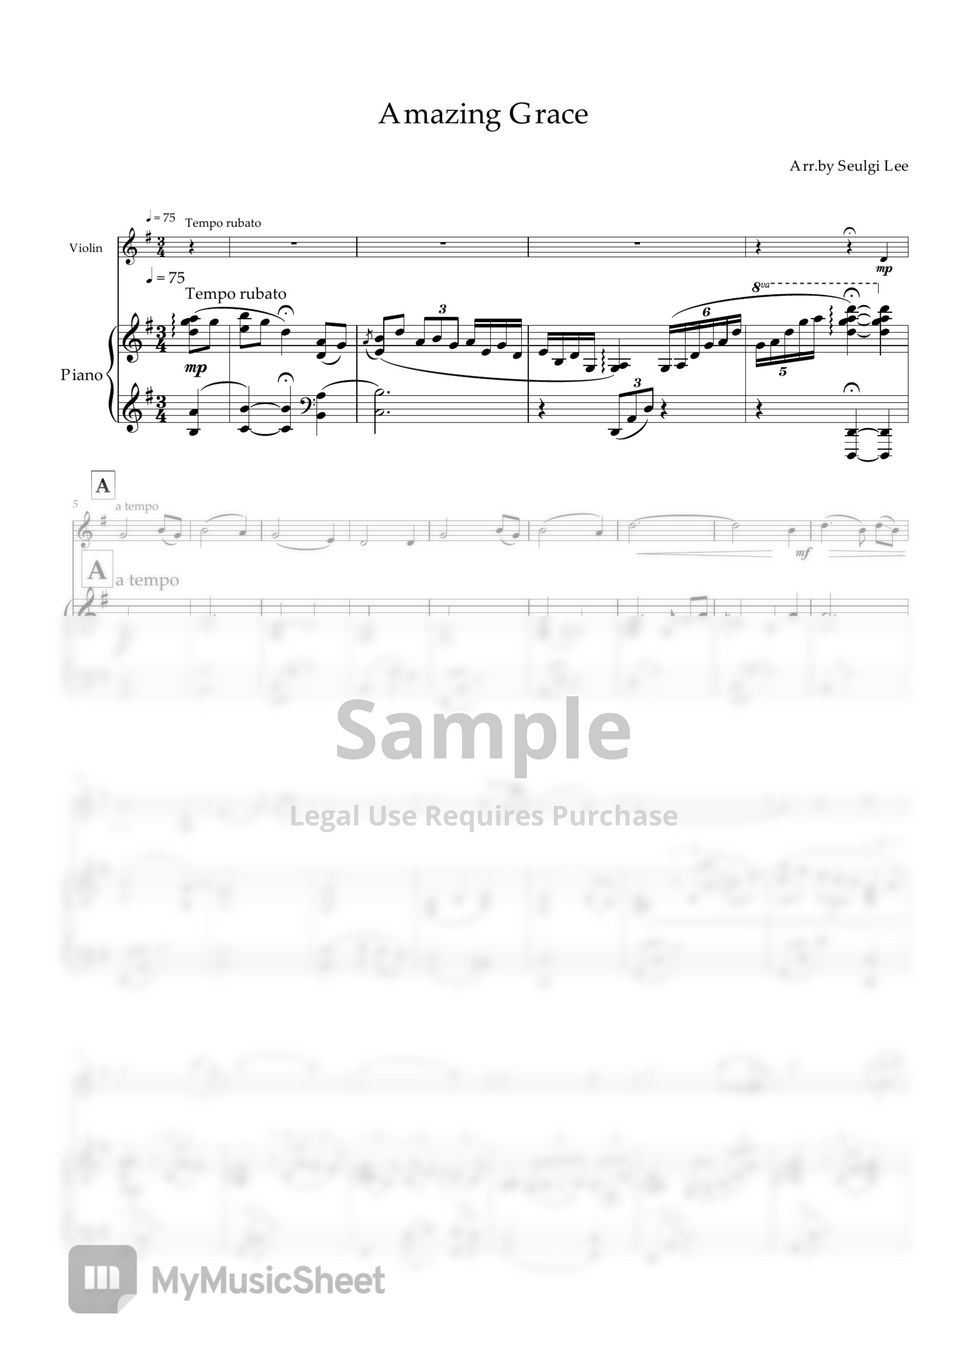 Hymn - Amazing Grace (Violin and Piano ver.) 어메이징그레이스_바이올린_피아노 by Seulgi Lee